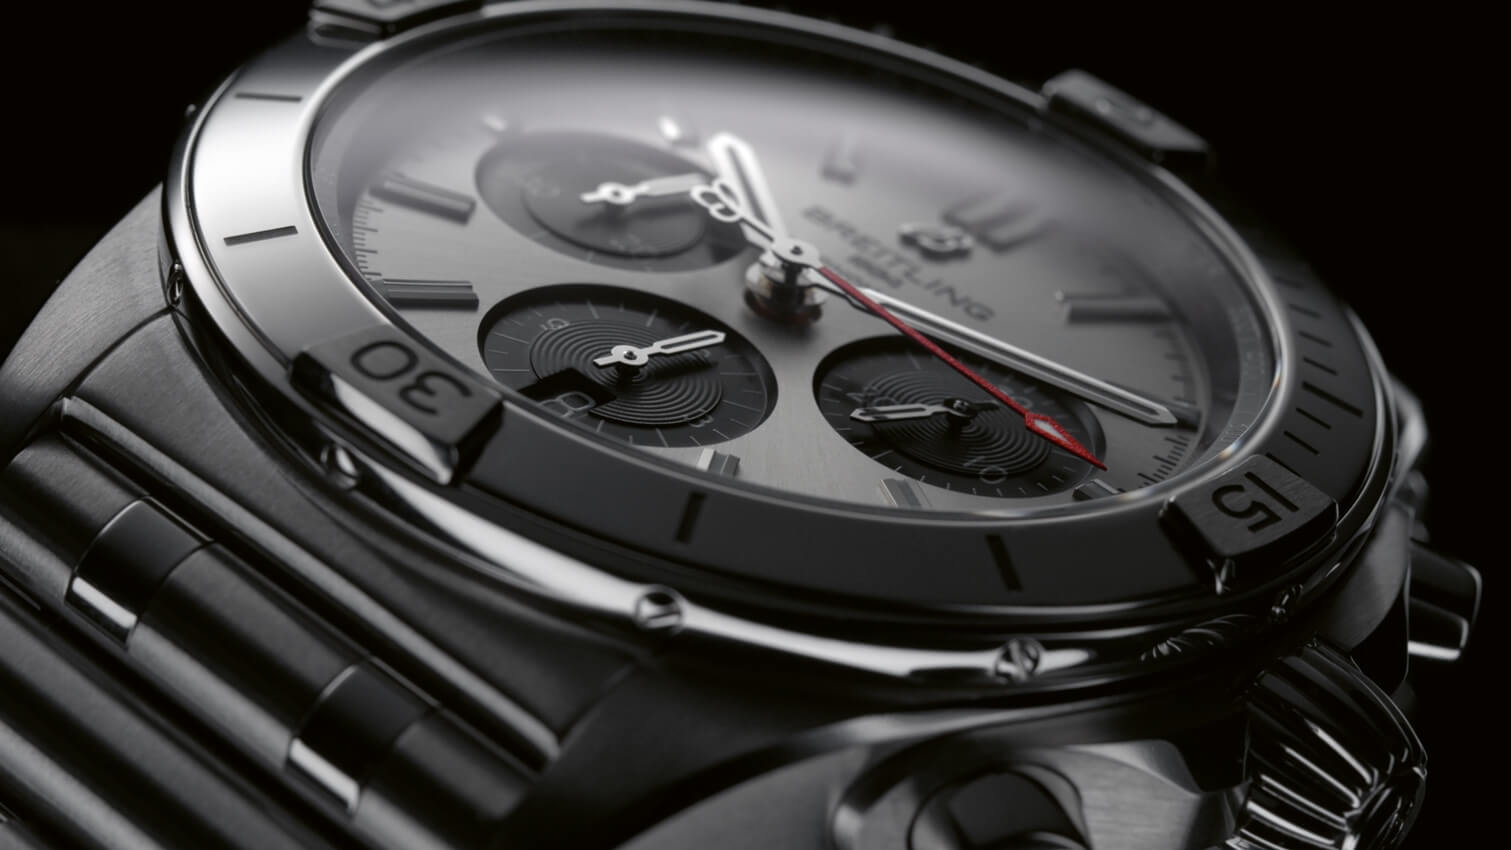 BREITLING Chronomat Collection – nowe wersje popularnego zegarka